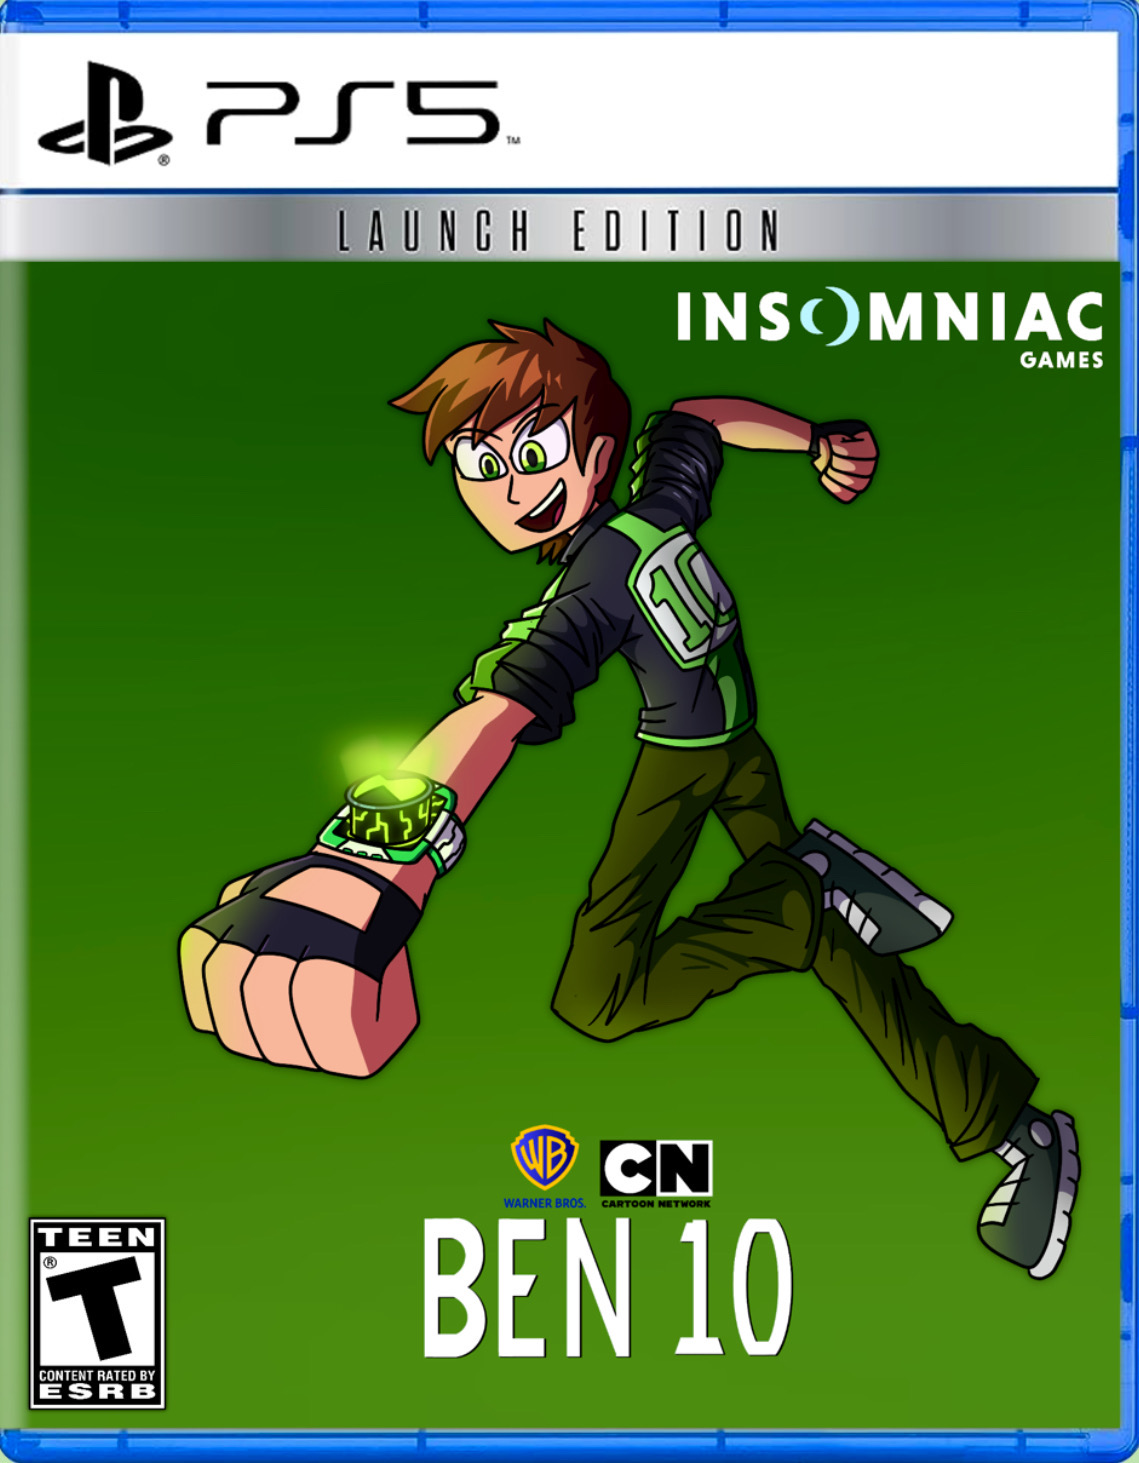 Ben 10 PS5 Insomniac Game by TenOutOfTenz on DeviantArt